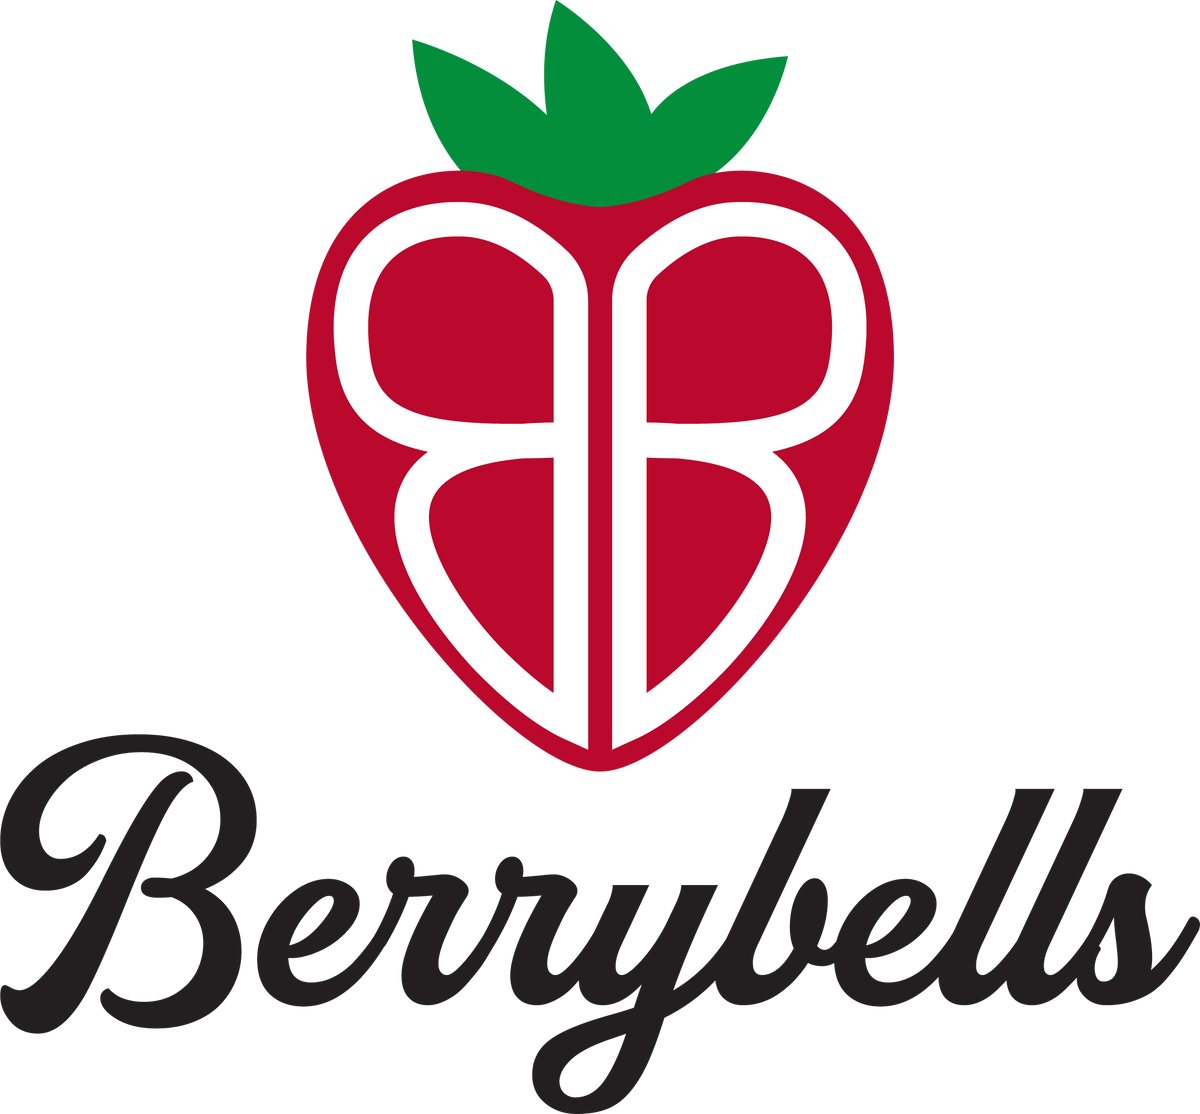 women's clothing – berrybells.com